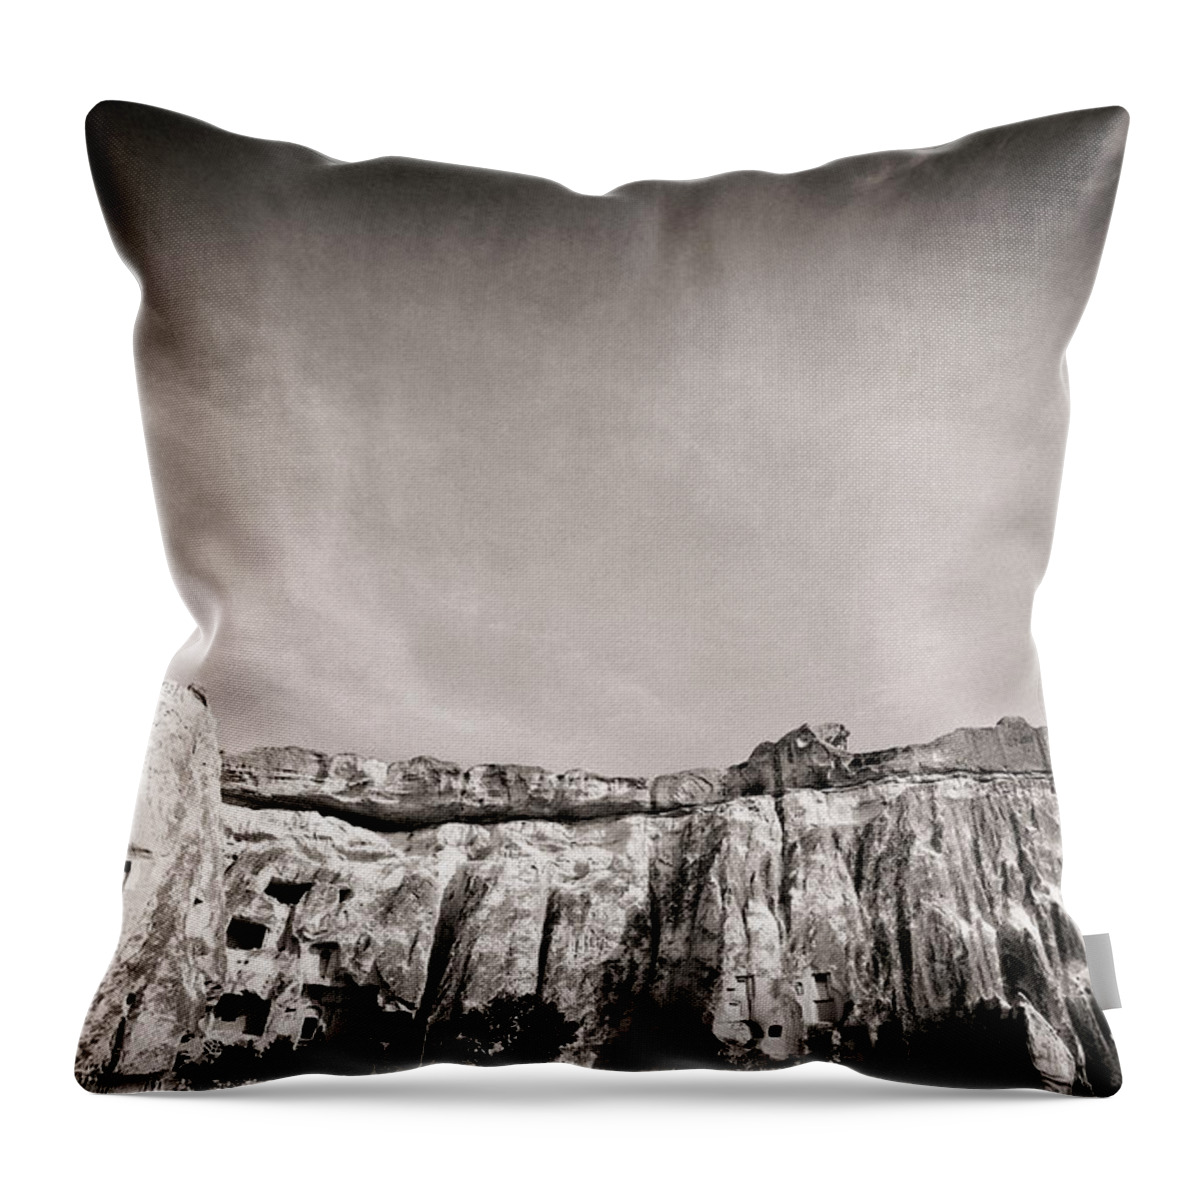 Prehistoric Era Throw Pillow featuring the photograph Cappadocia by Temizyurek